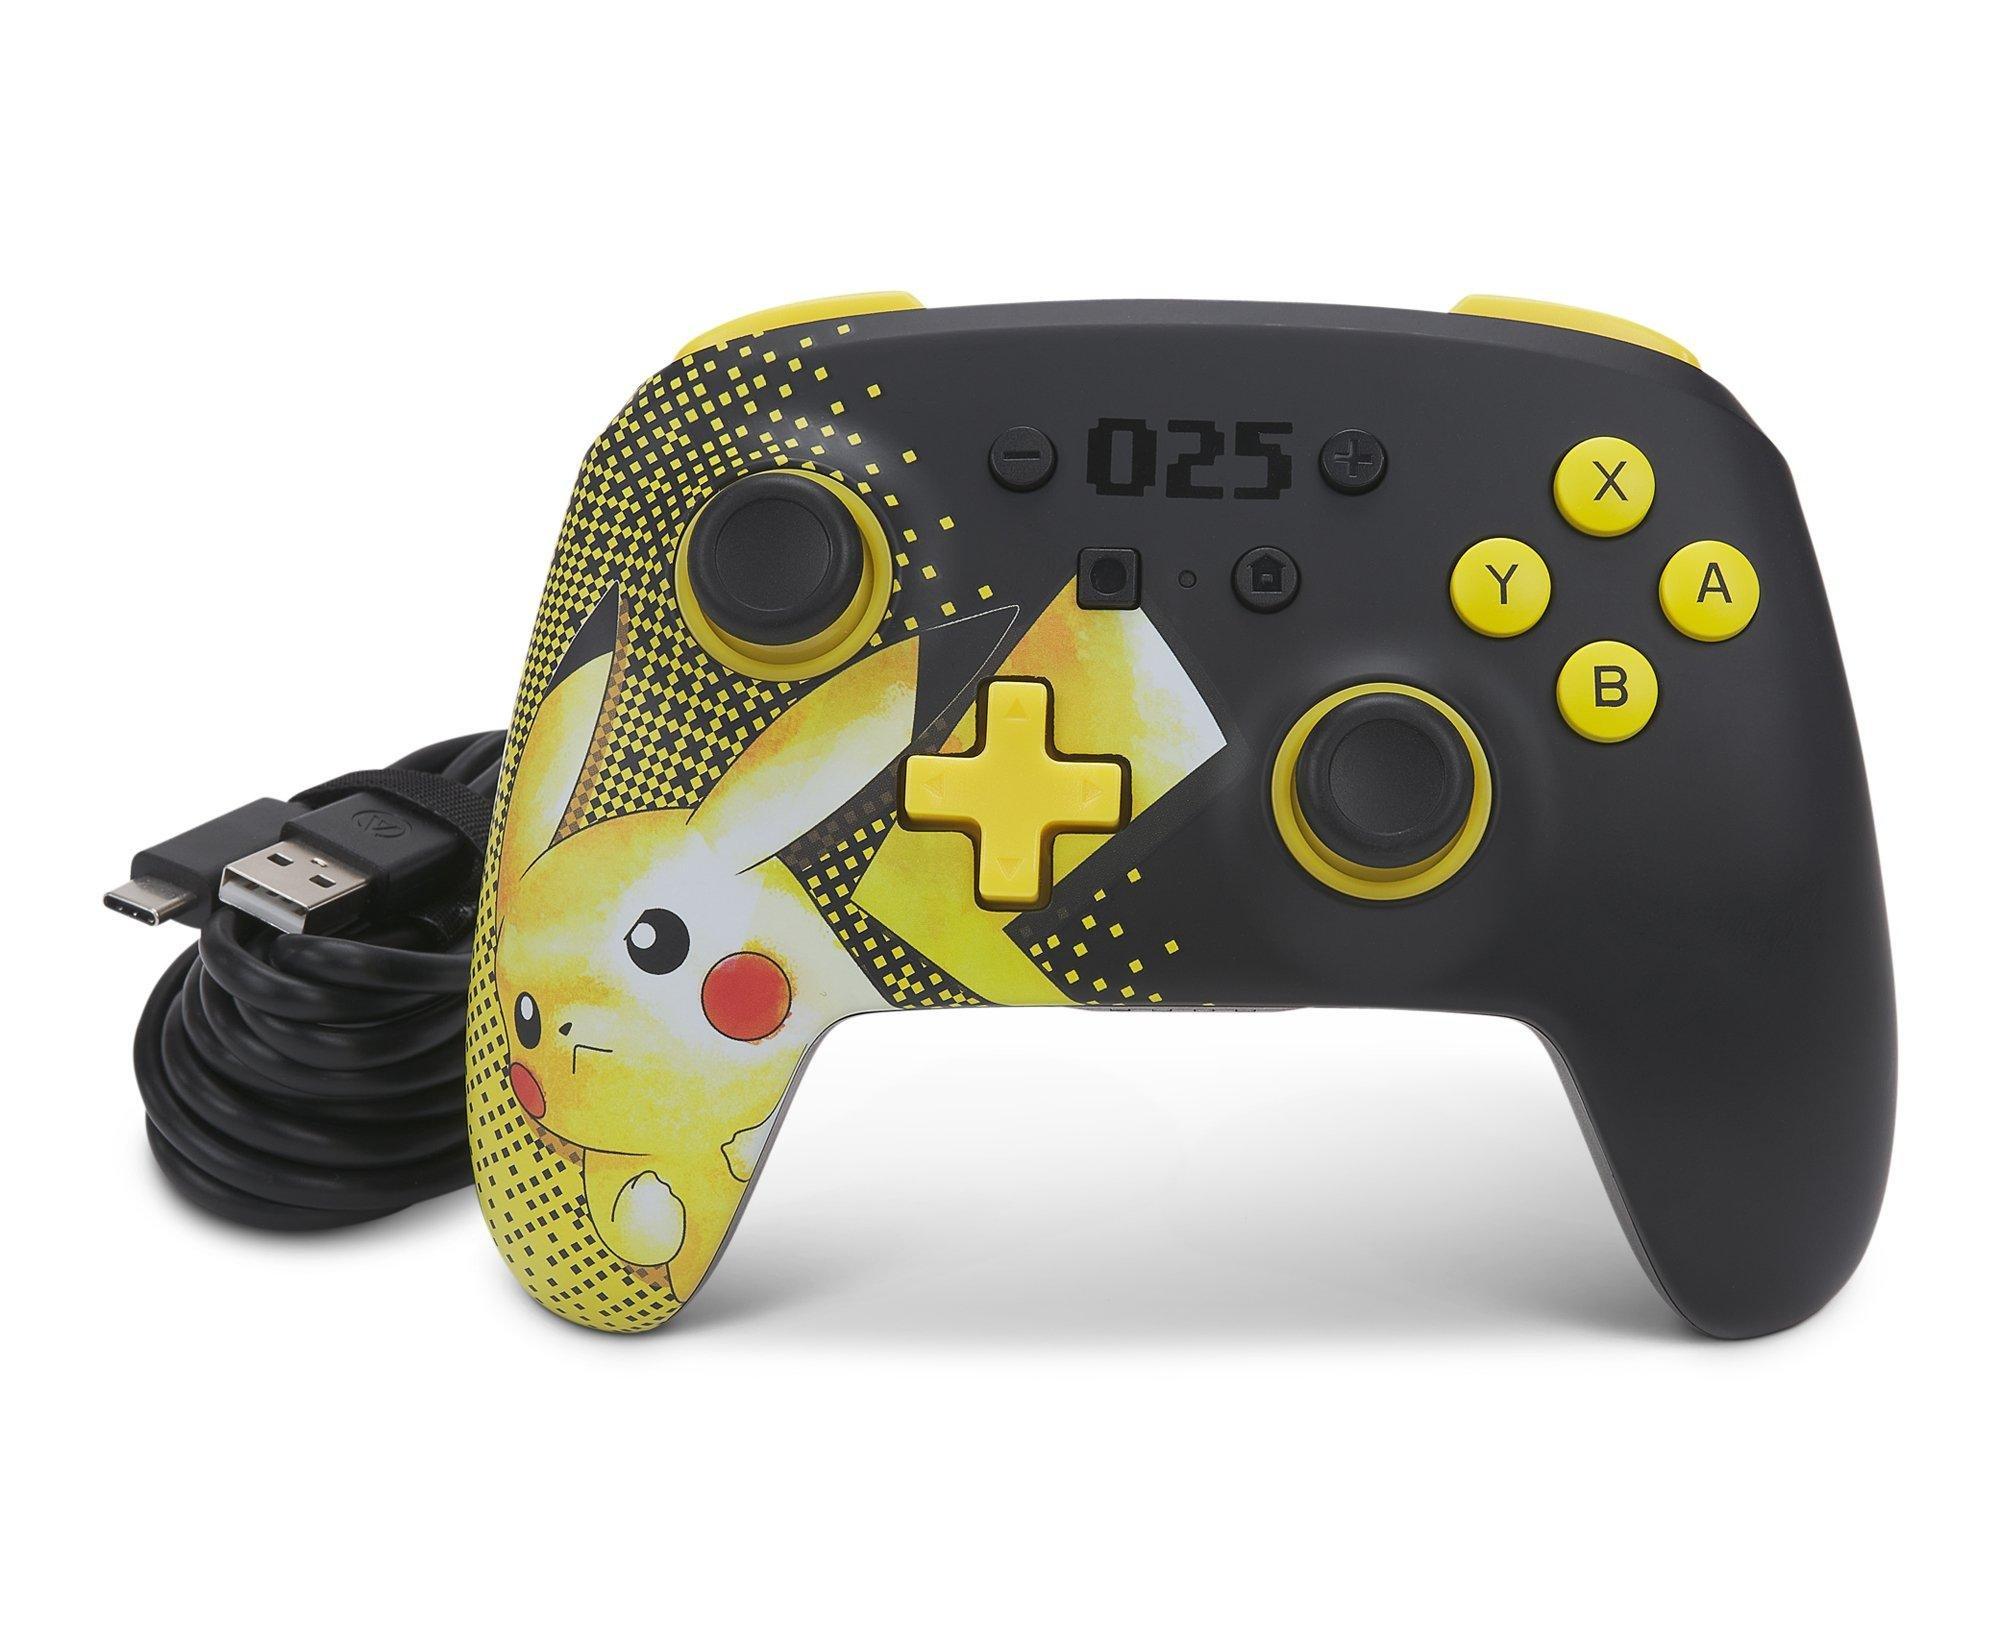 Speed джойстик. Покемоны Xbox. Pro Controller Pikachu. POWERA Pikachu Fade wired Nintendo Switch Controller.